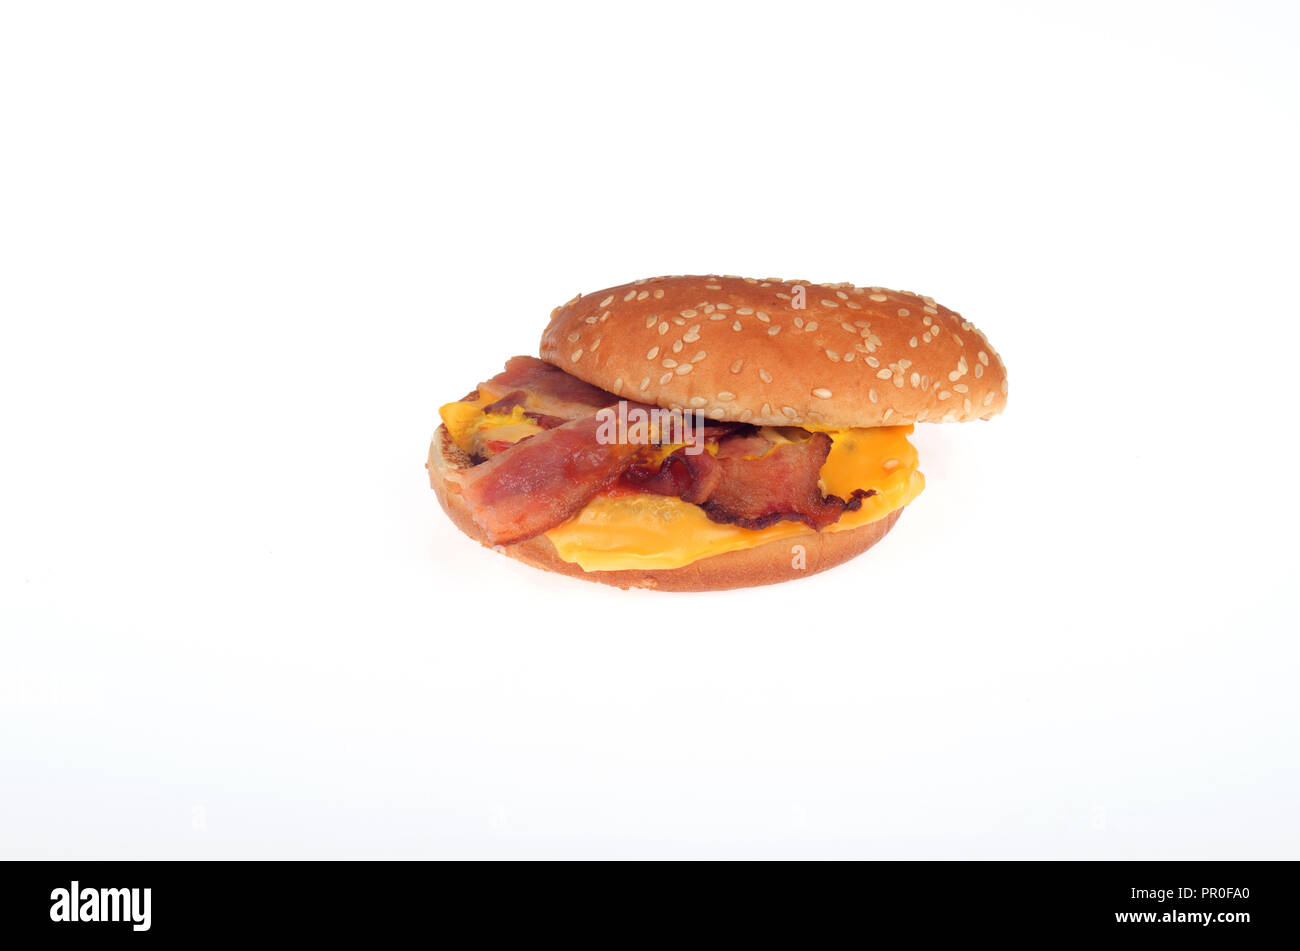 Burger King Bacon cheeseburger with sesame seed bun on white background Stock Photo